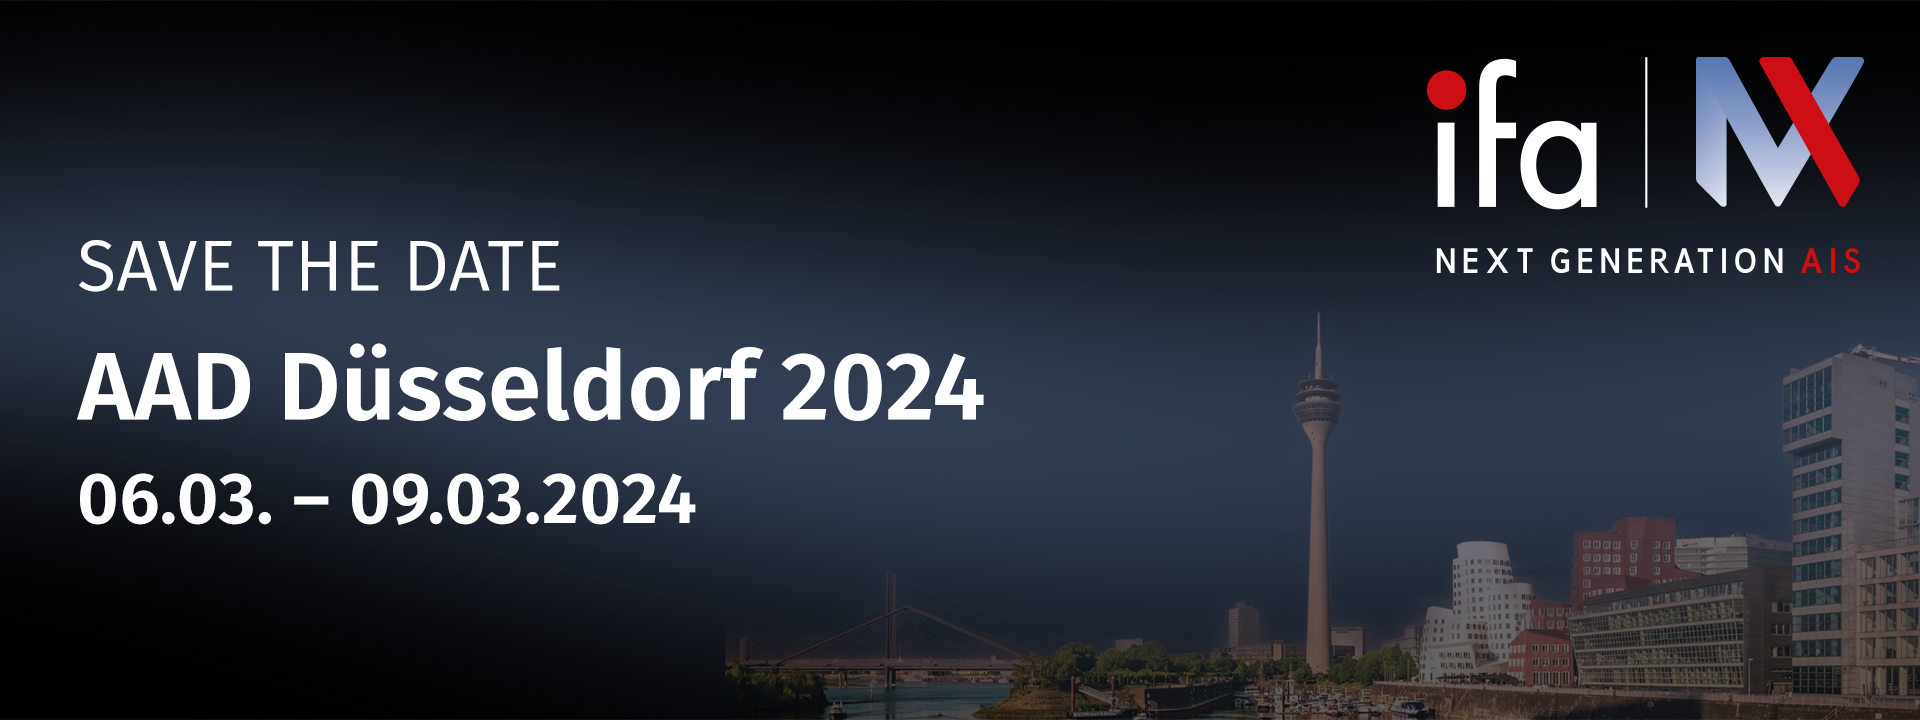 AAD Düsseldorf 2024, ifa an Stand 266